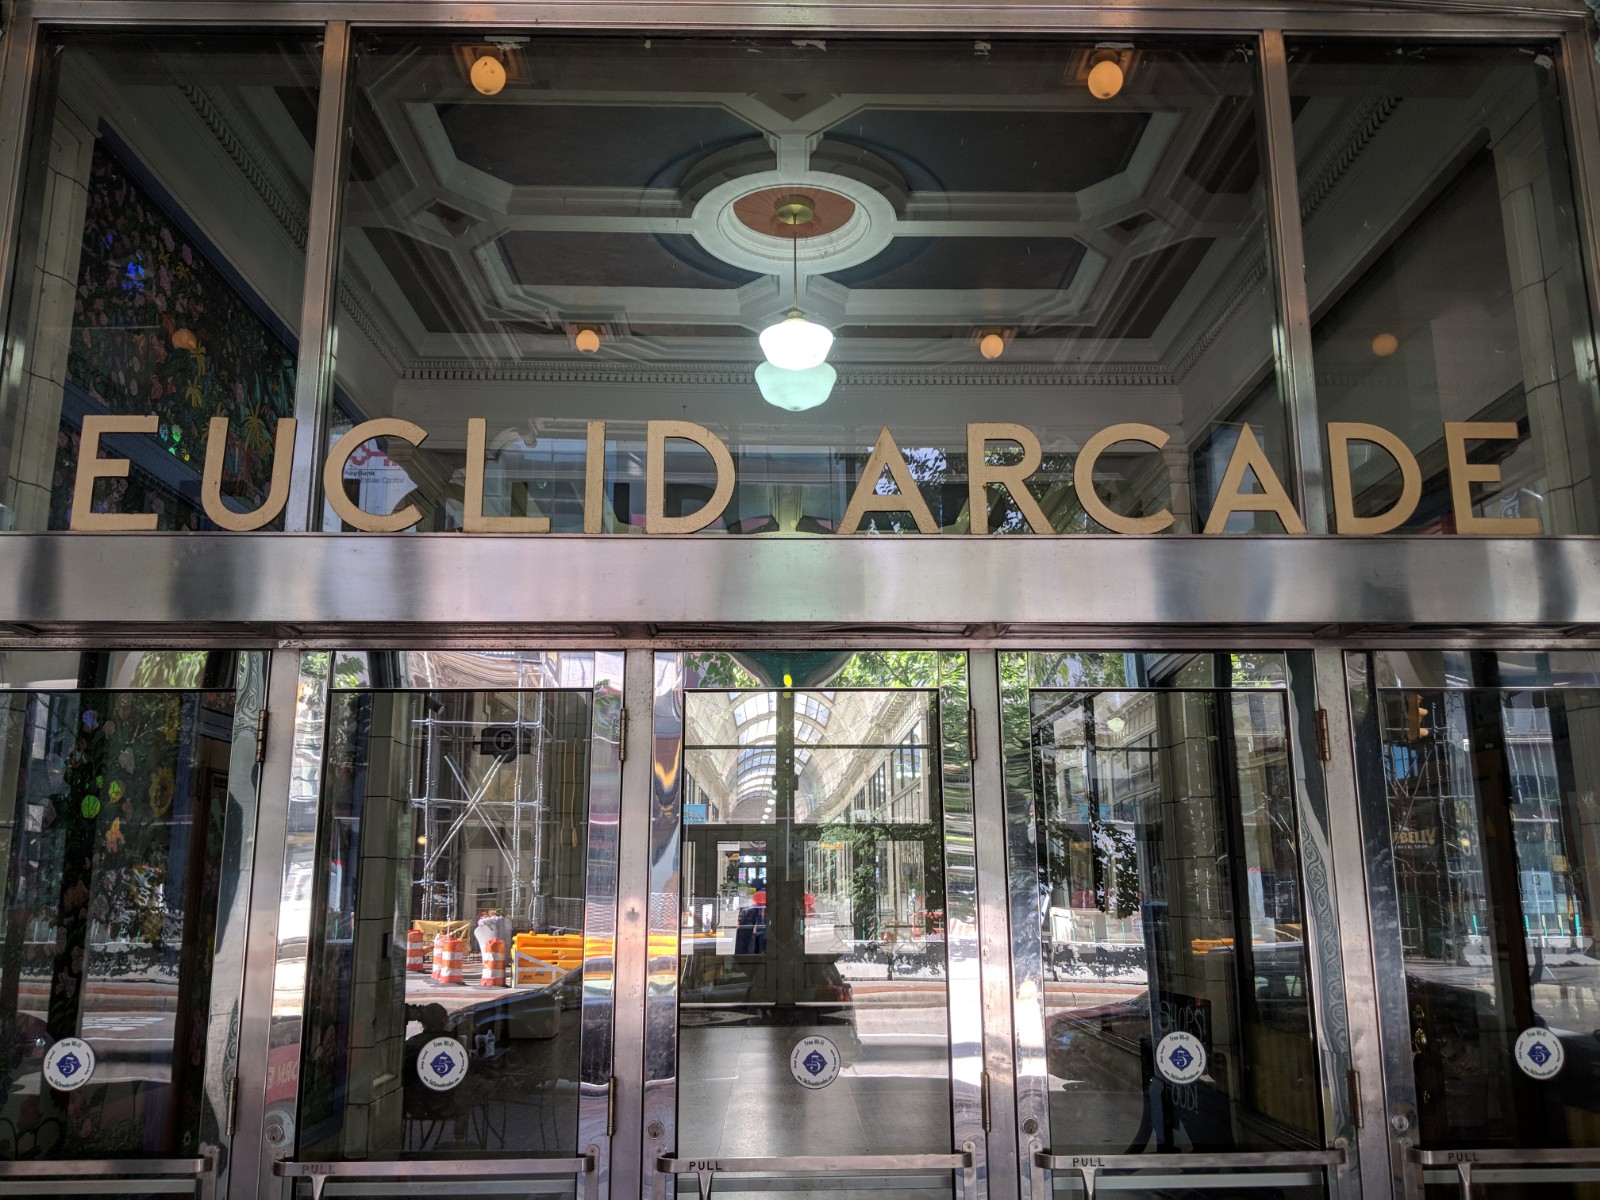 Cleveland's Euclid Arcade